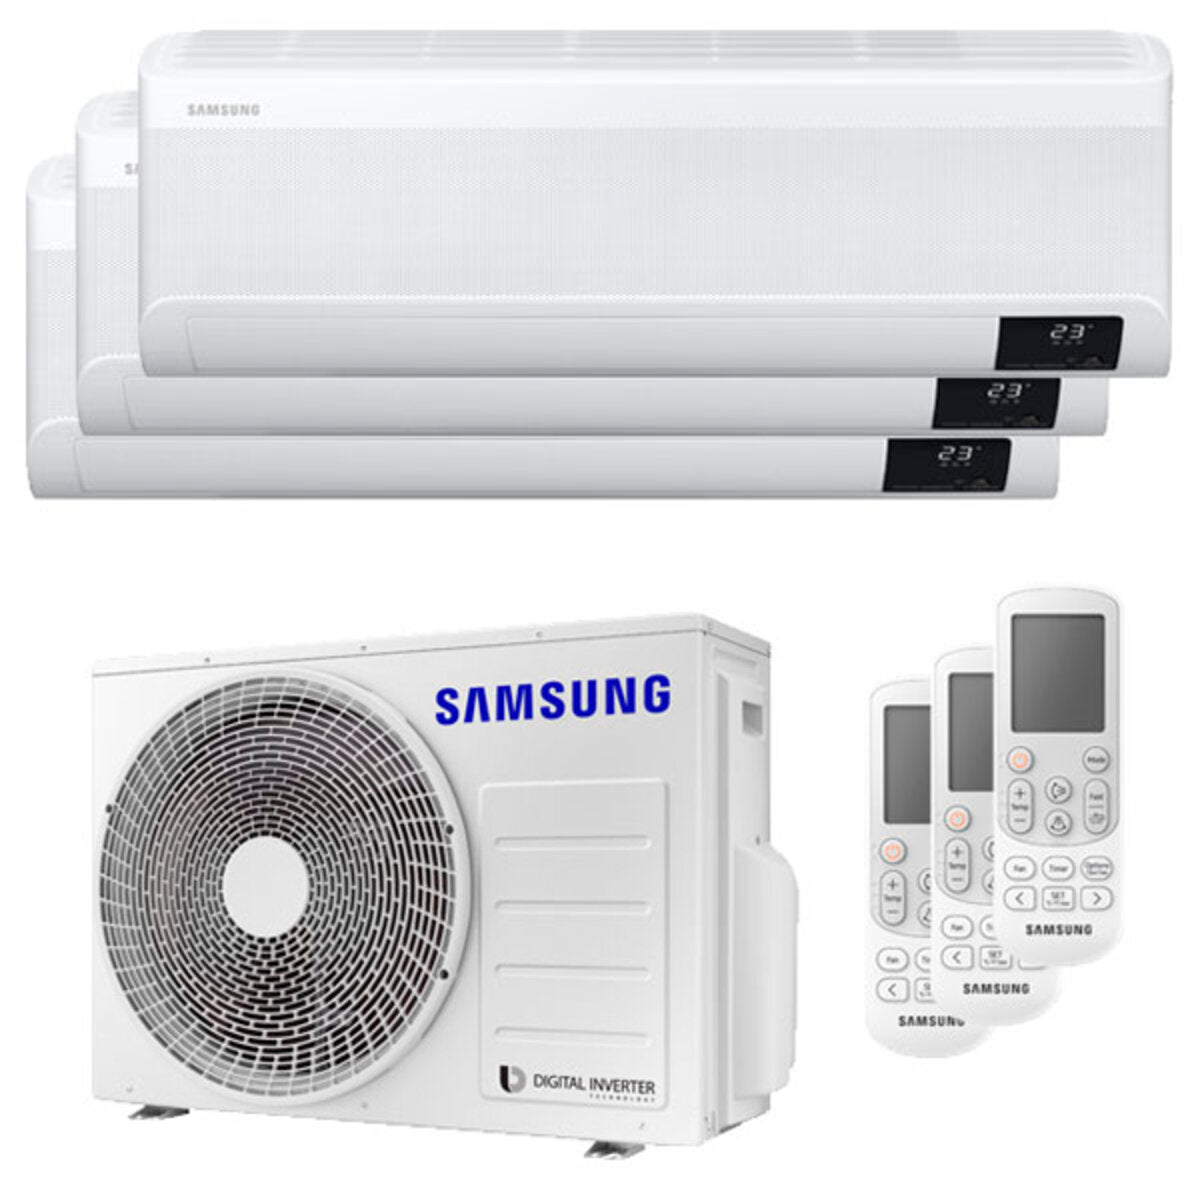 Samsung windfree air conditioner Avant trial split 7000 + 7000 + 7000 BTU inverter A ++ wifi outdoor unit 5.2 kW